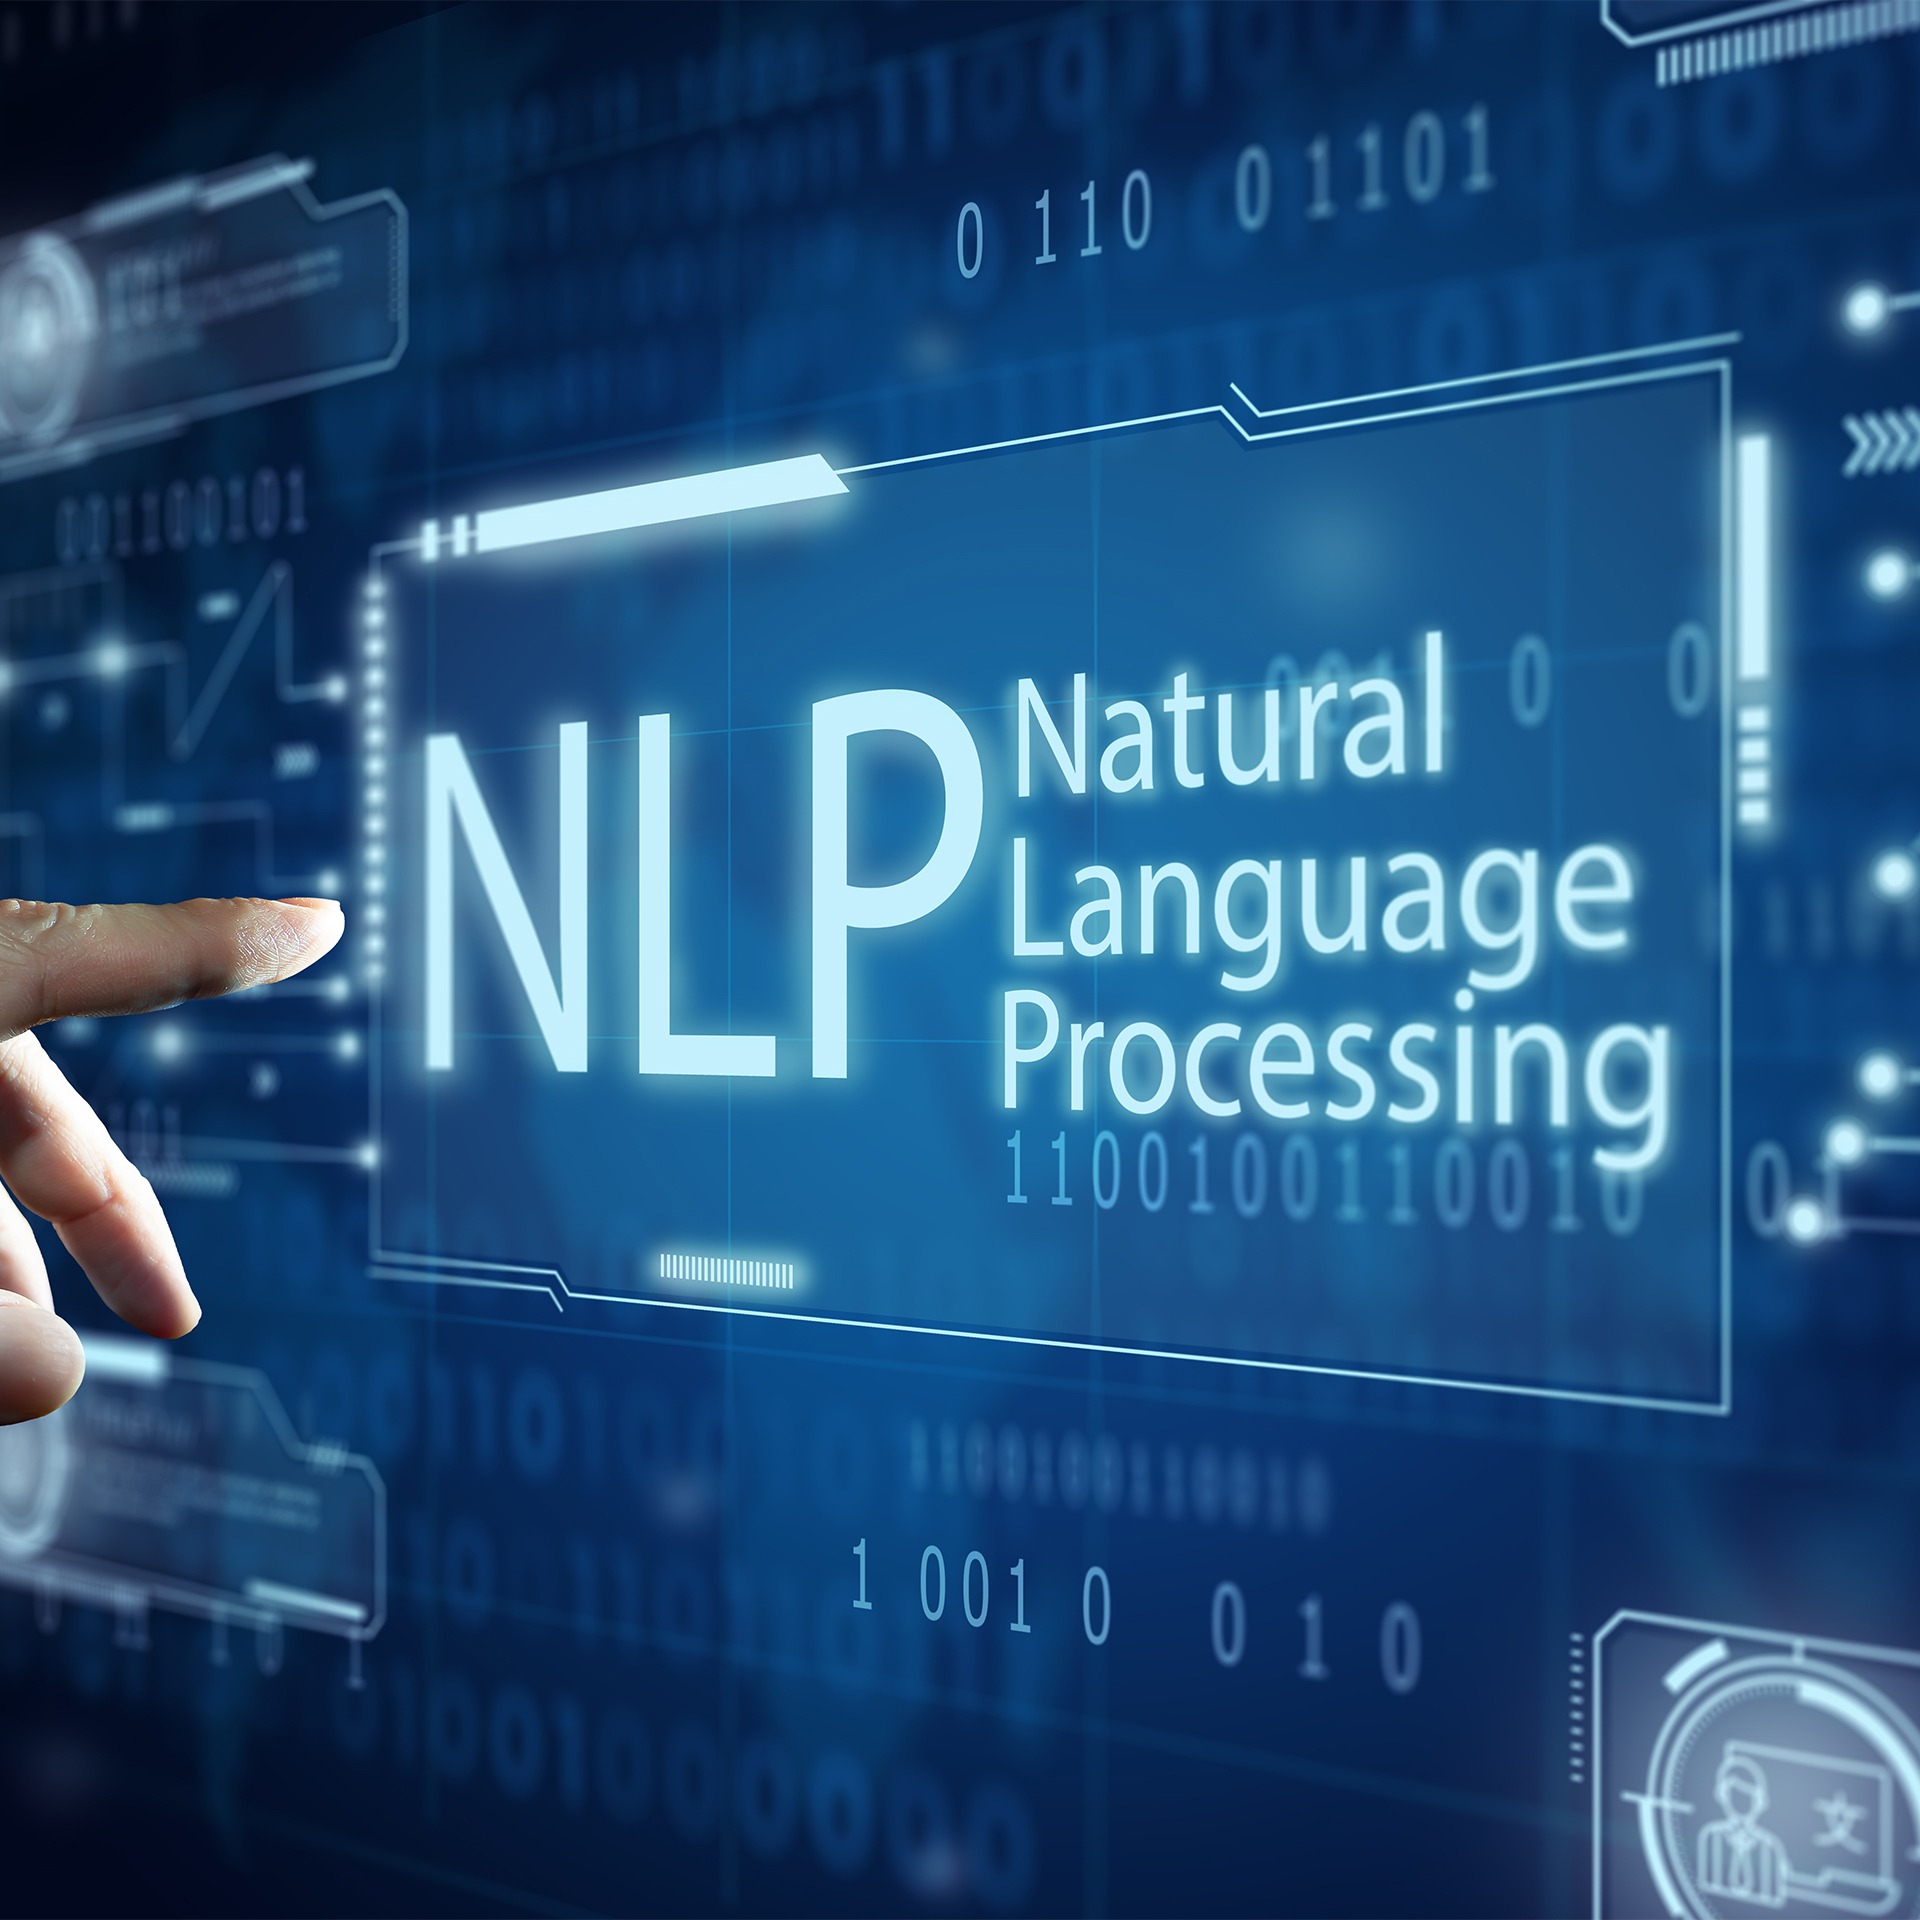 nlp-natural-language-processing-cognitive-computing-technology-concept